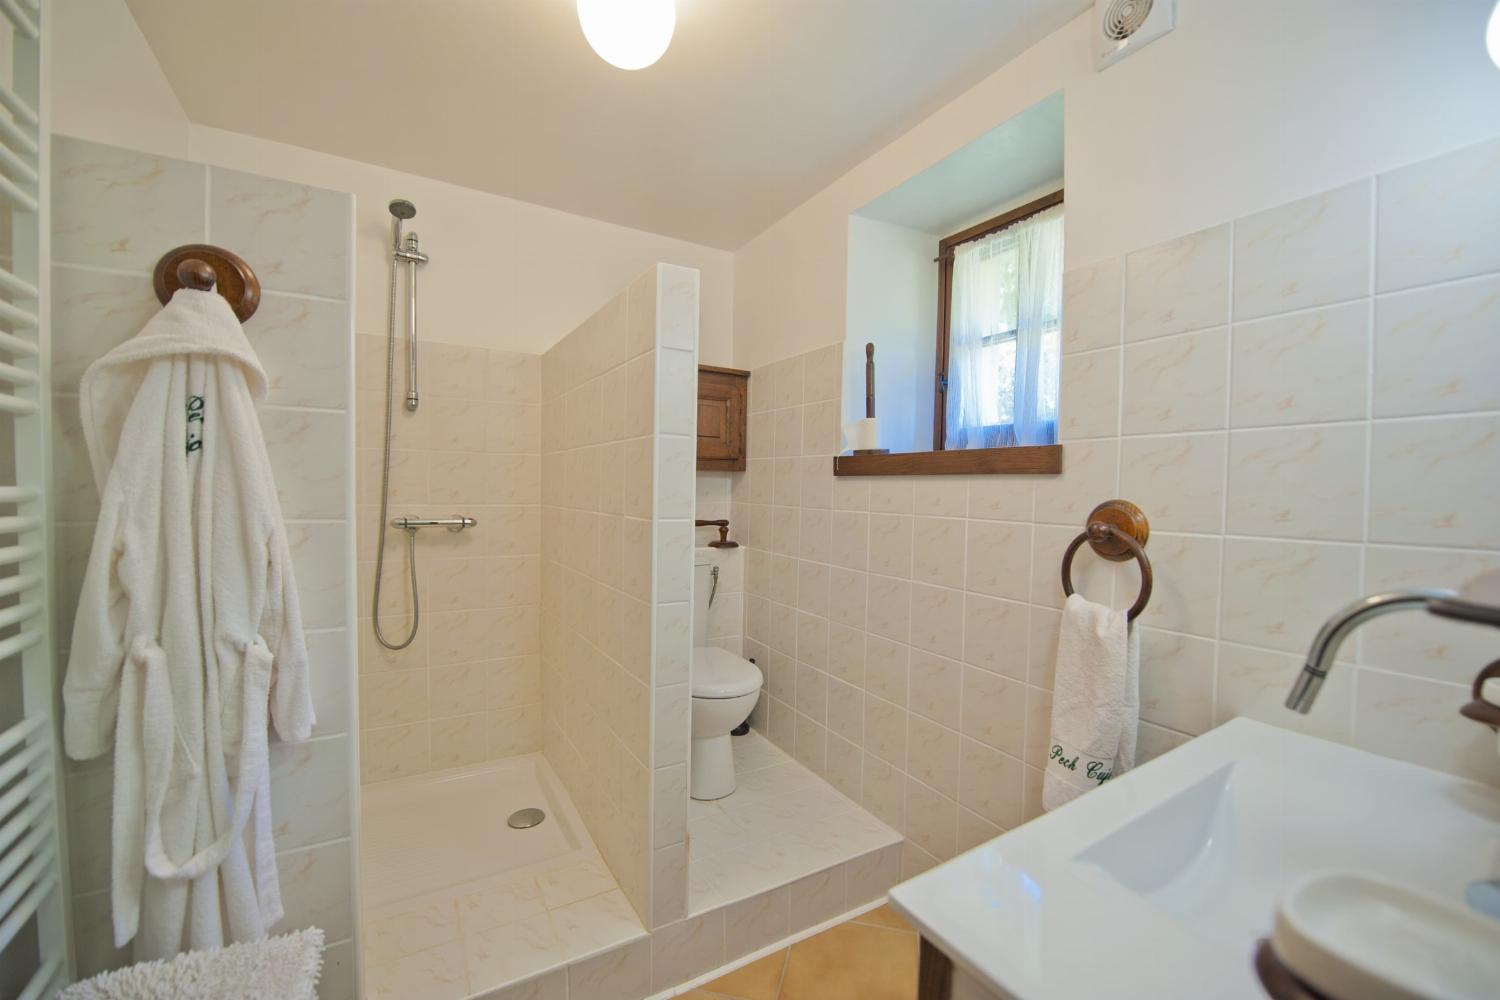 Bathroom | Rental home in Lot